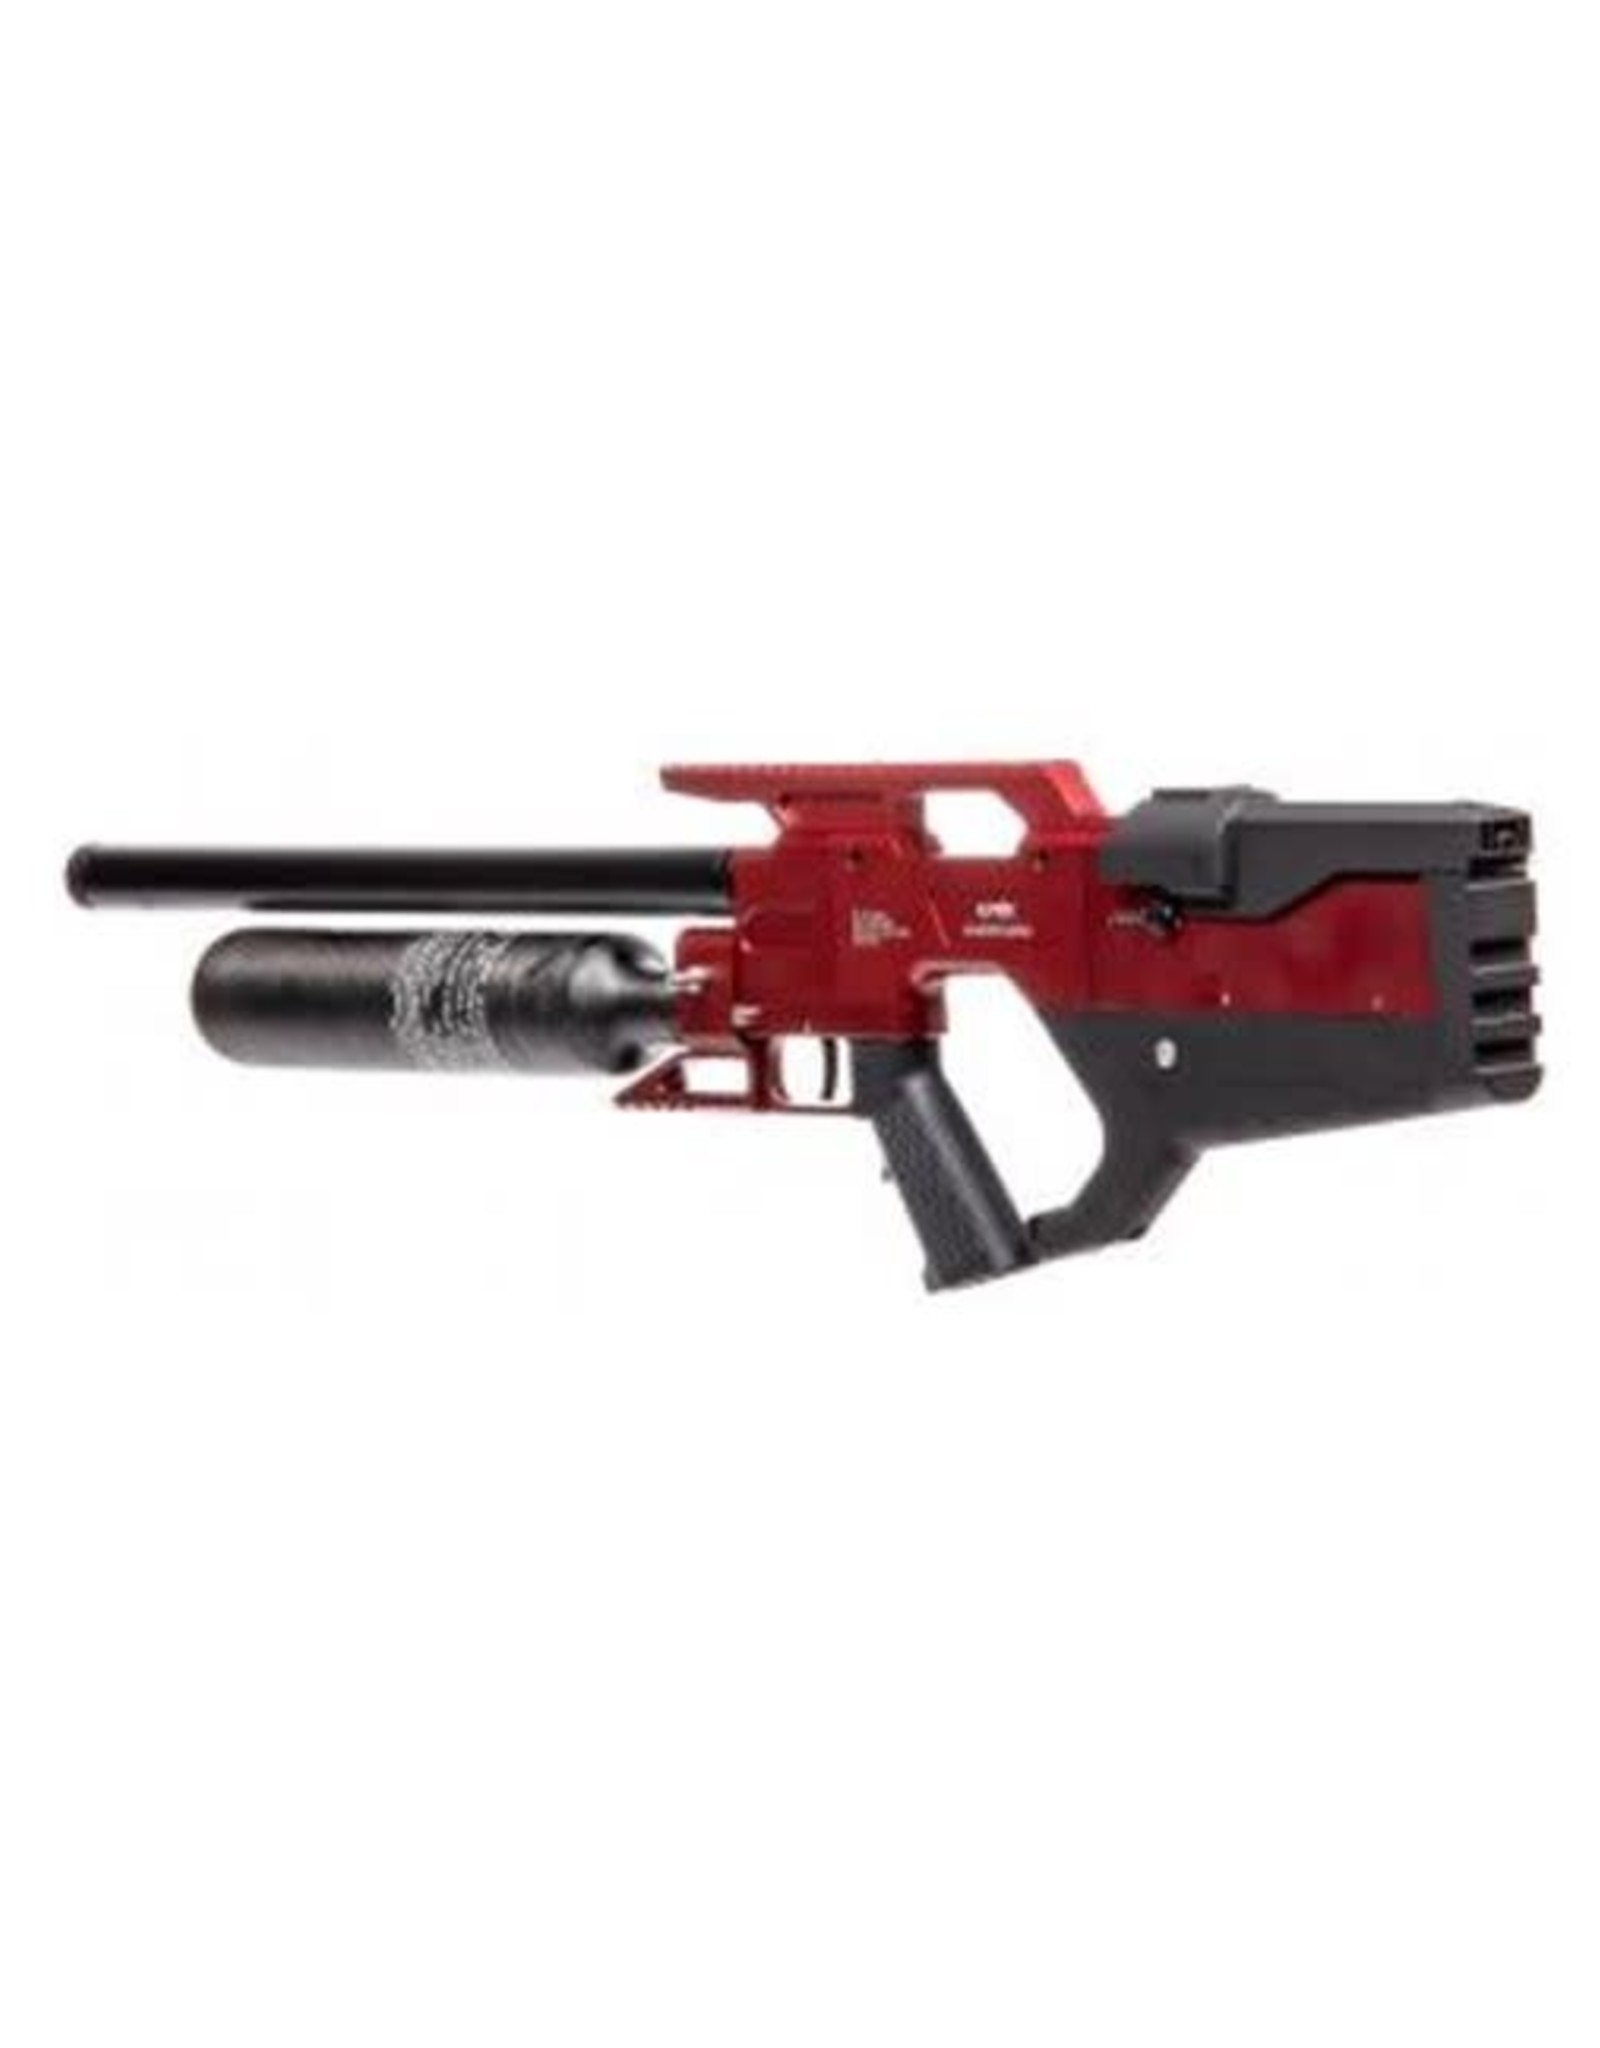 Evanix .22 (5.5mm) Cal. Evanix Cloud Ultra Semi-Auto PCP Air Rifle - Red